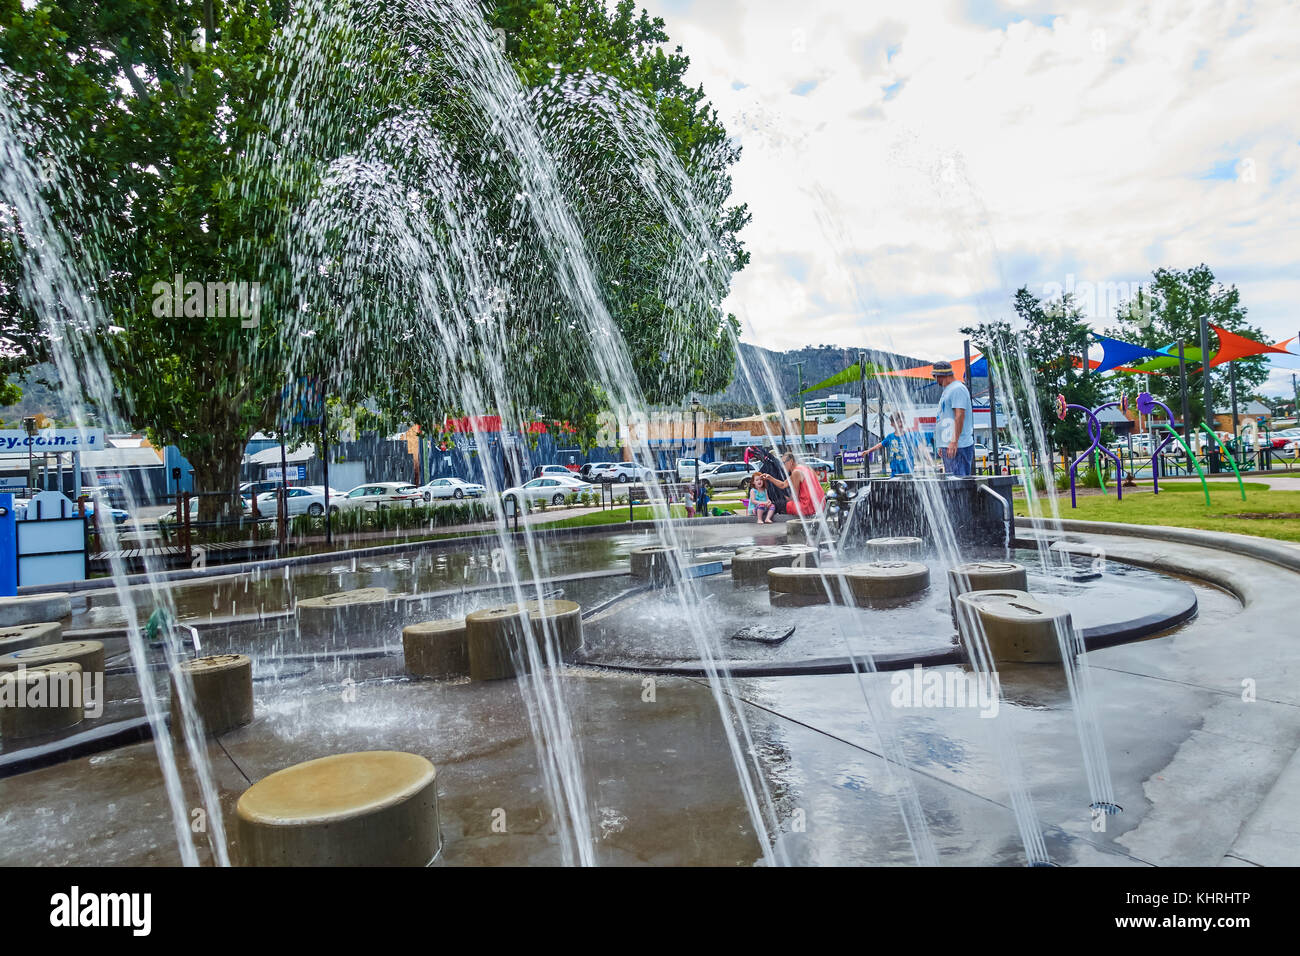 Children's splash padl with fountains,Tamworth Australia. Stock Photo